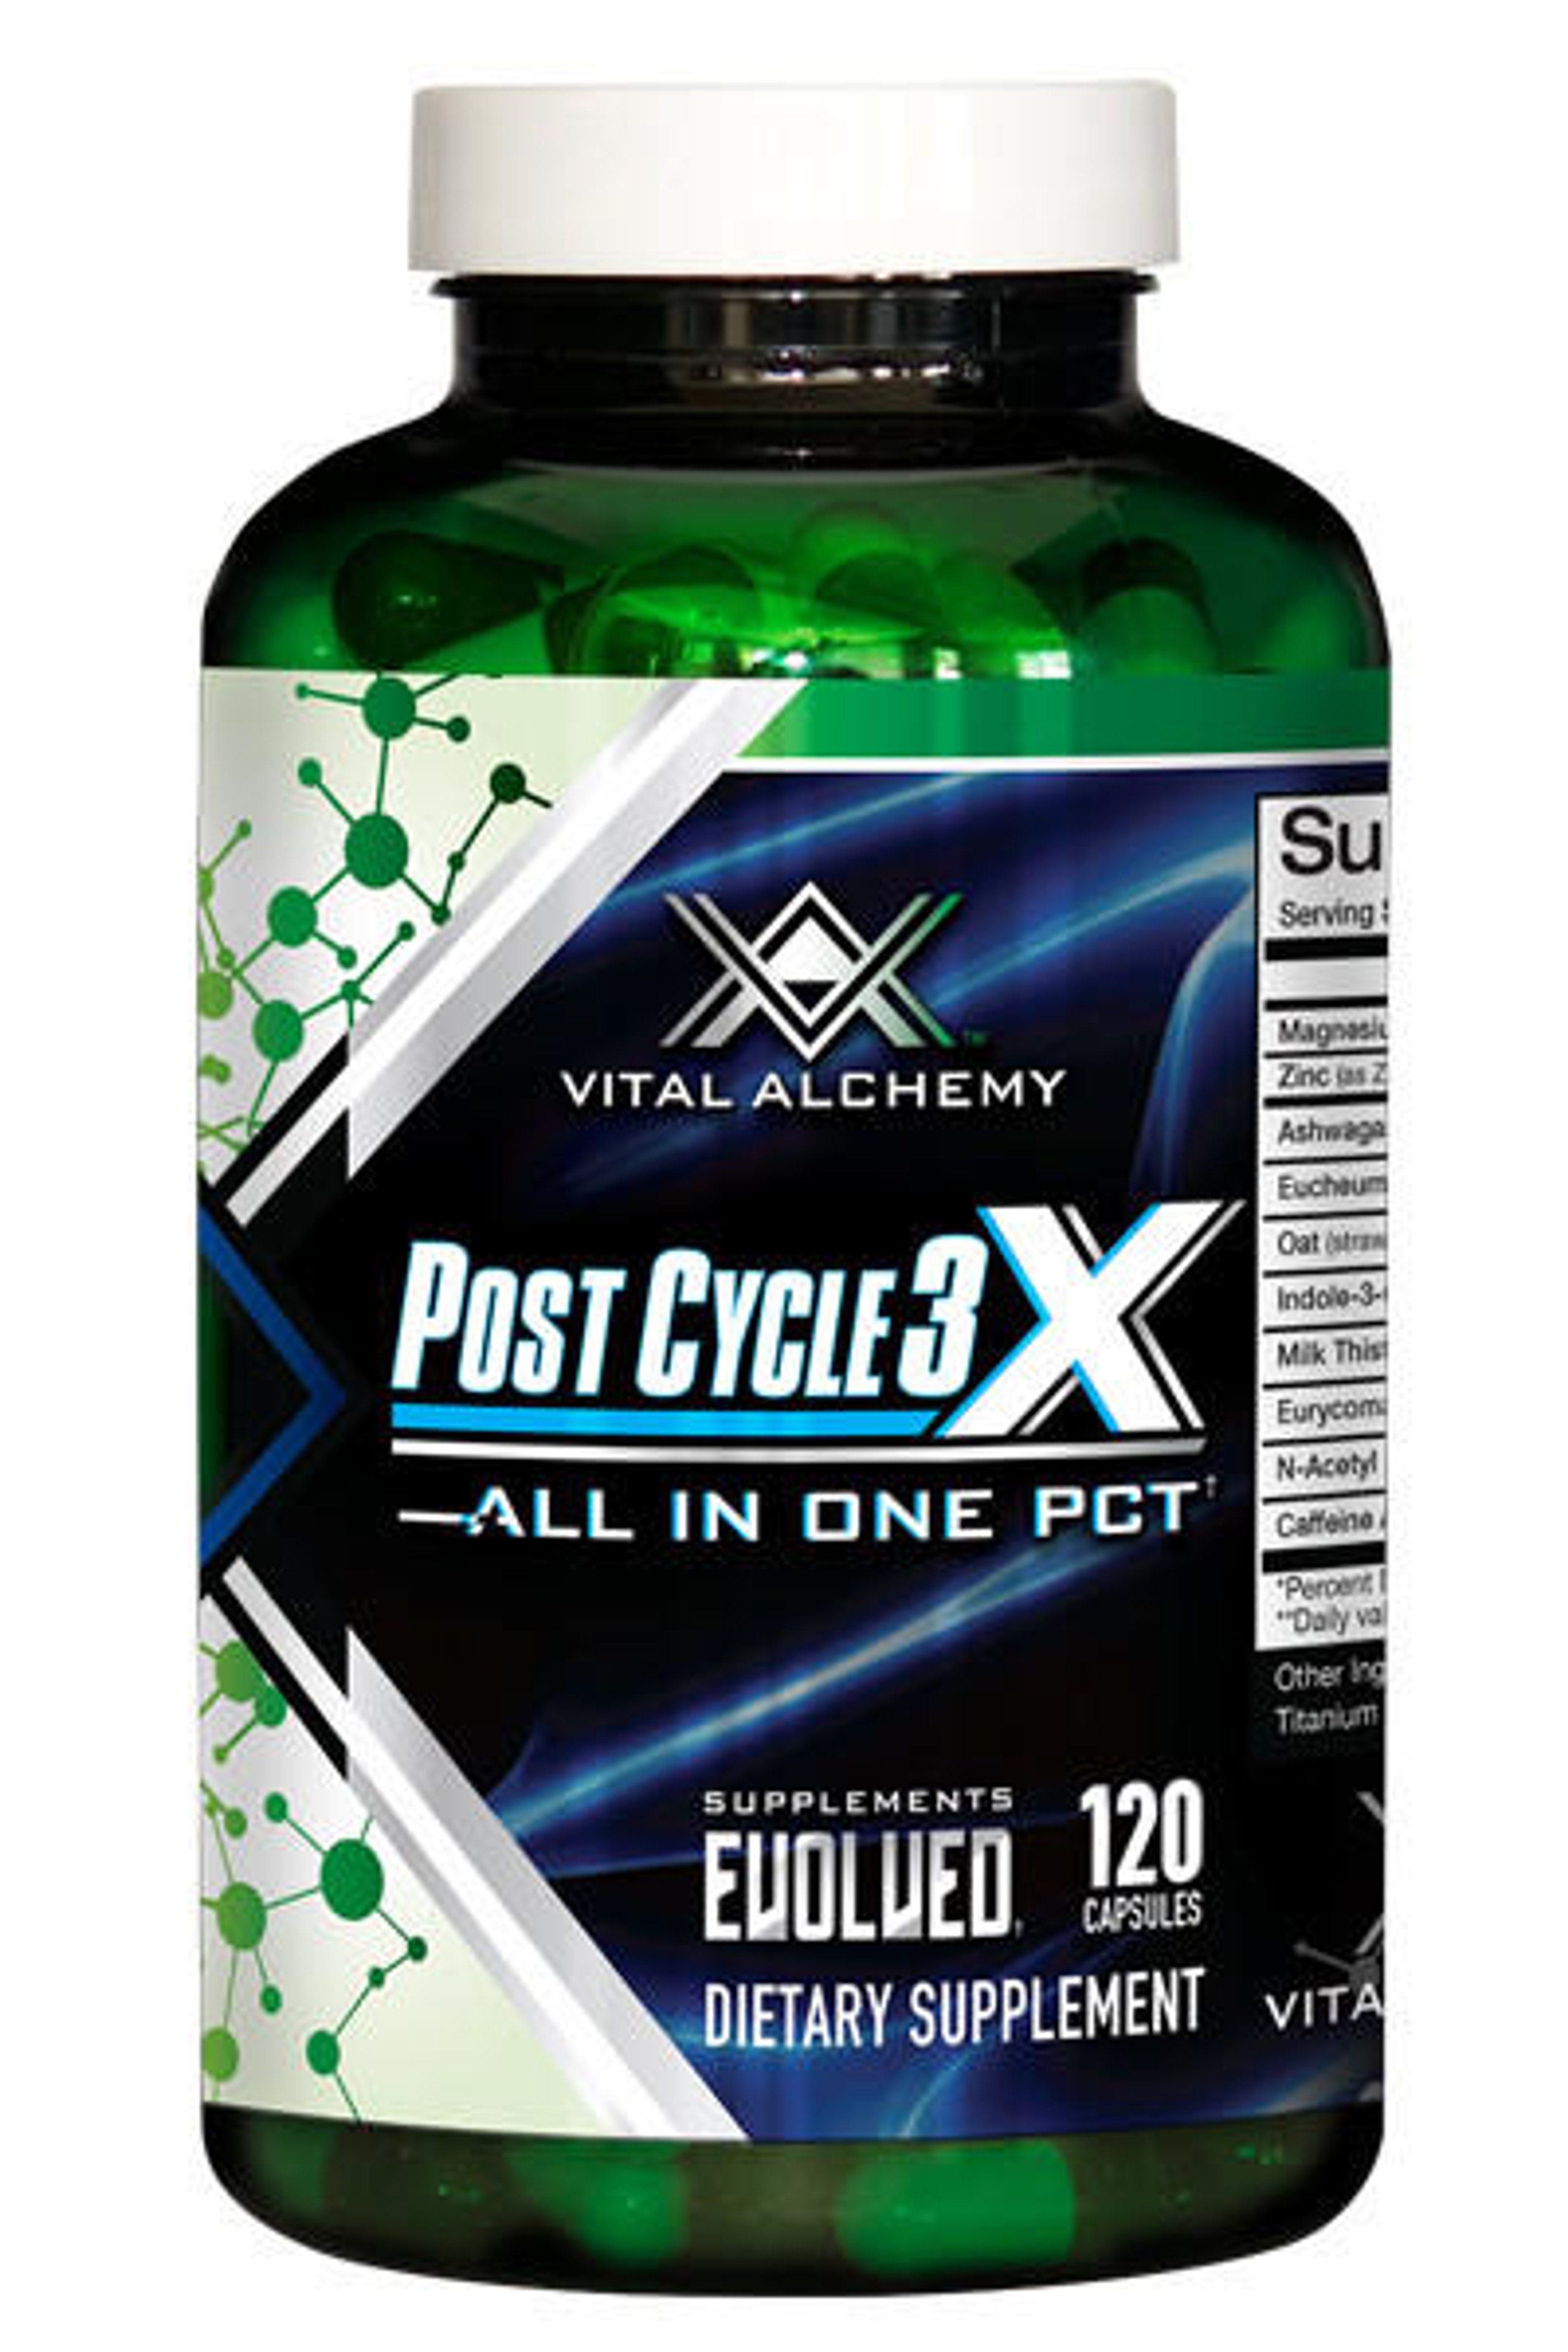 Post Cycle 3X by Vital Alchemy